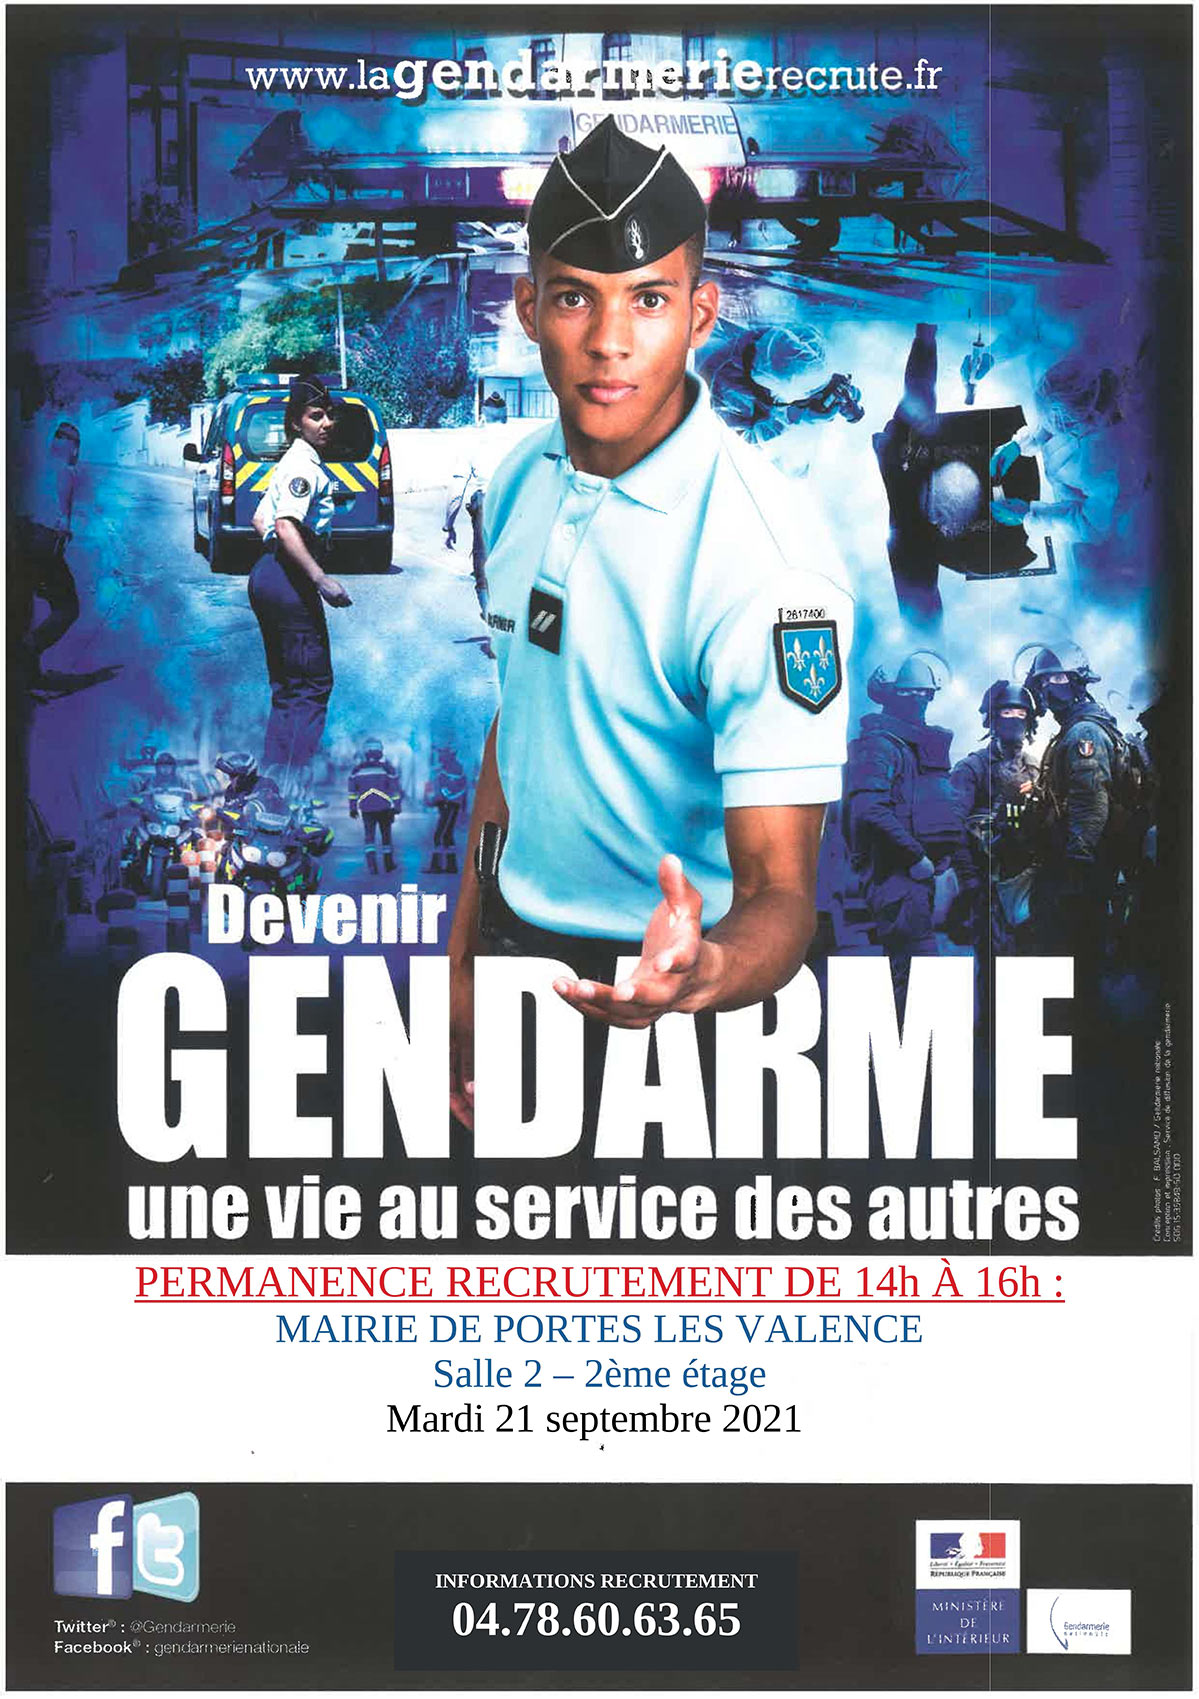 Recrutement gendarmerie